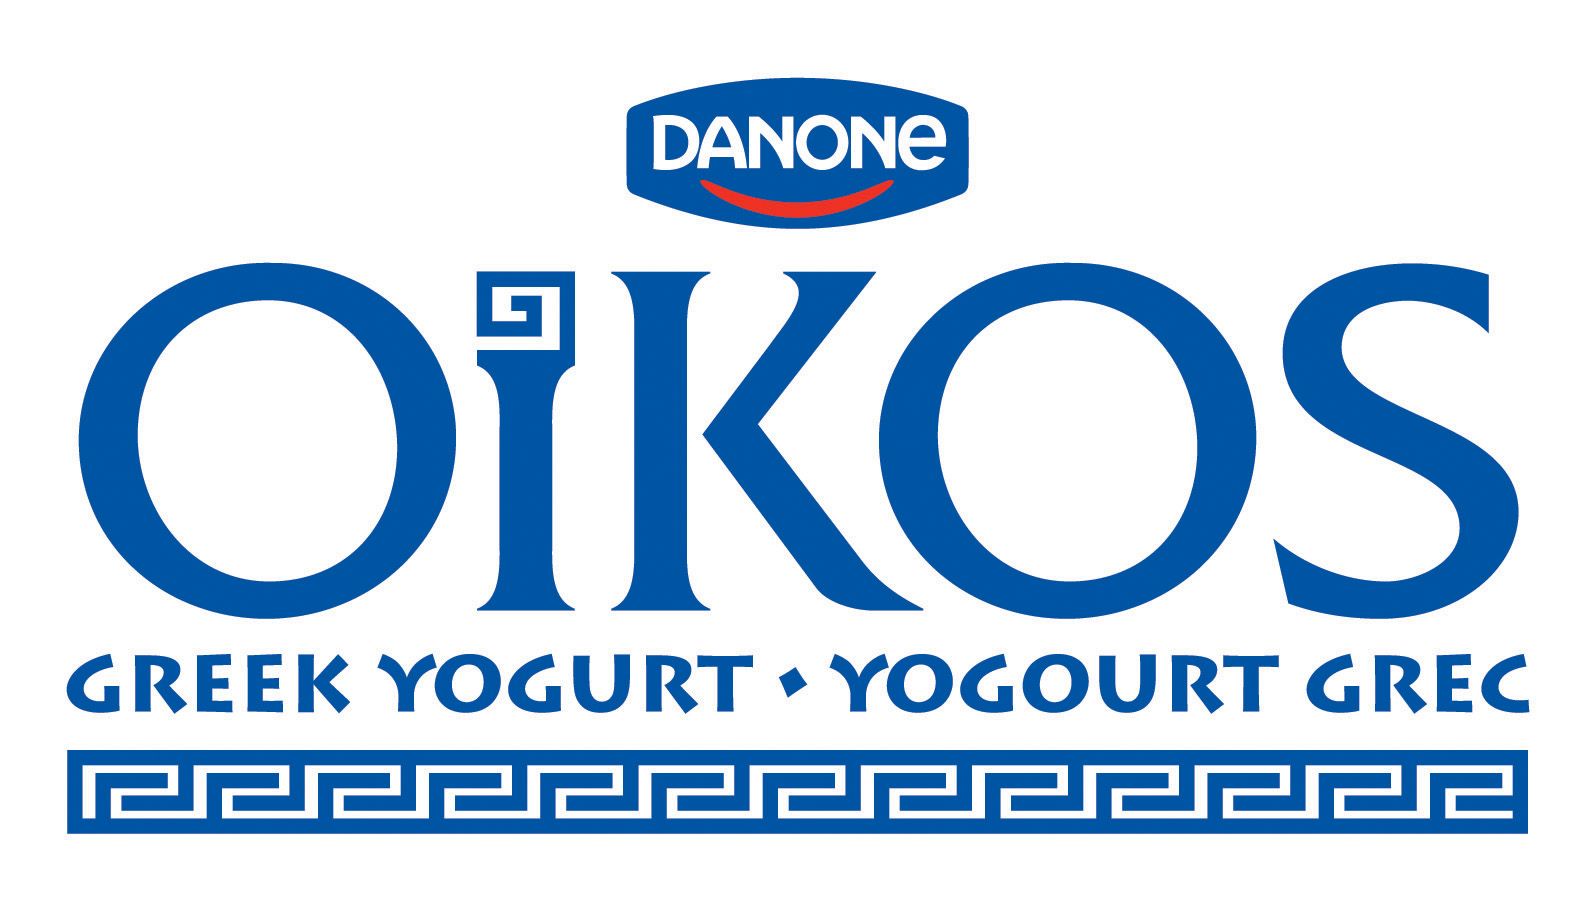 Yogurt Logos